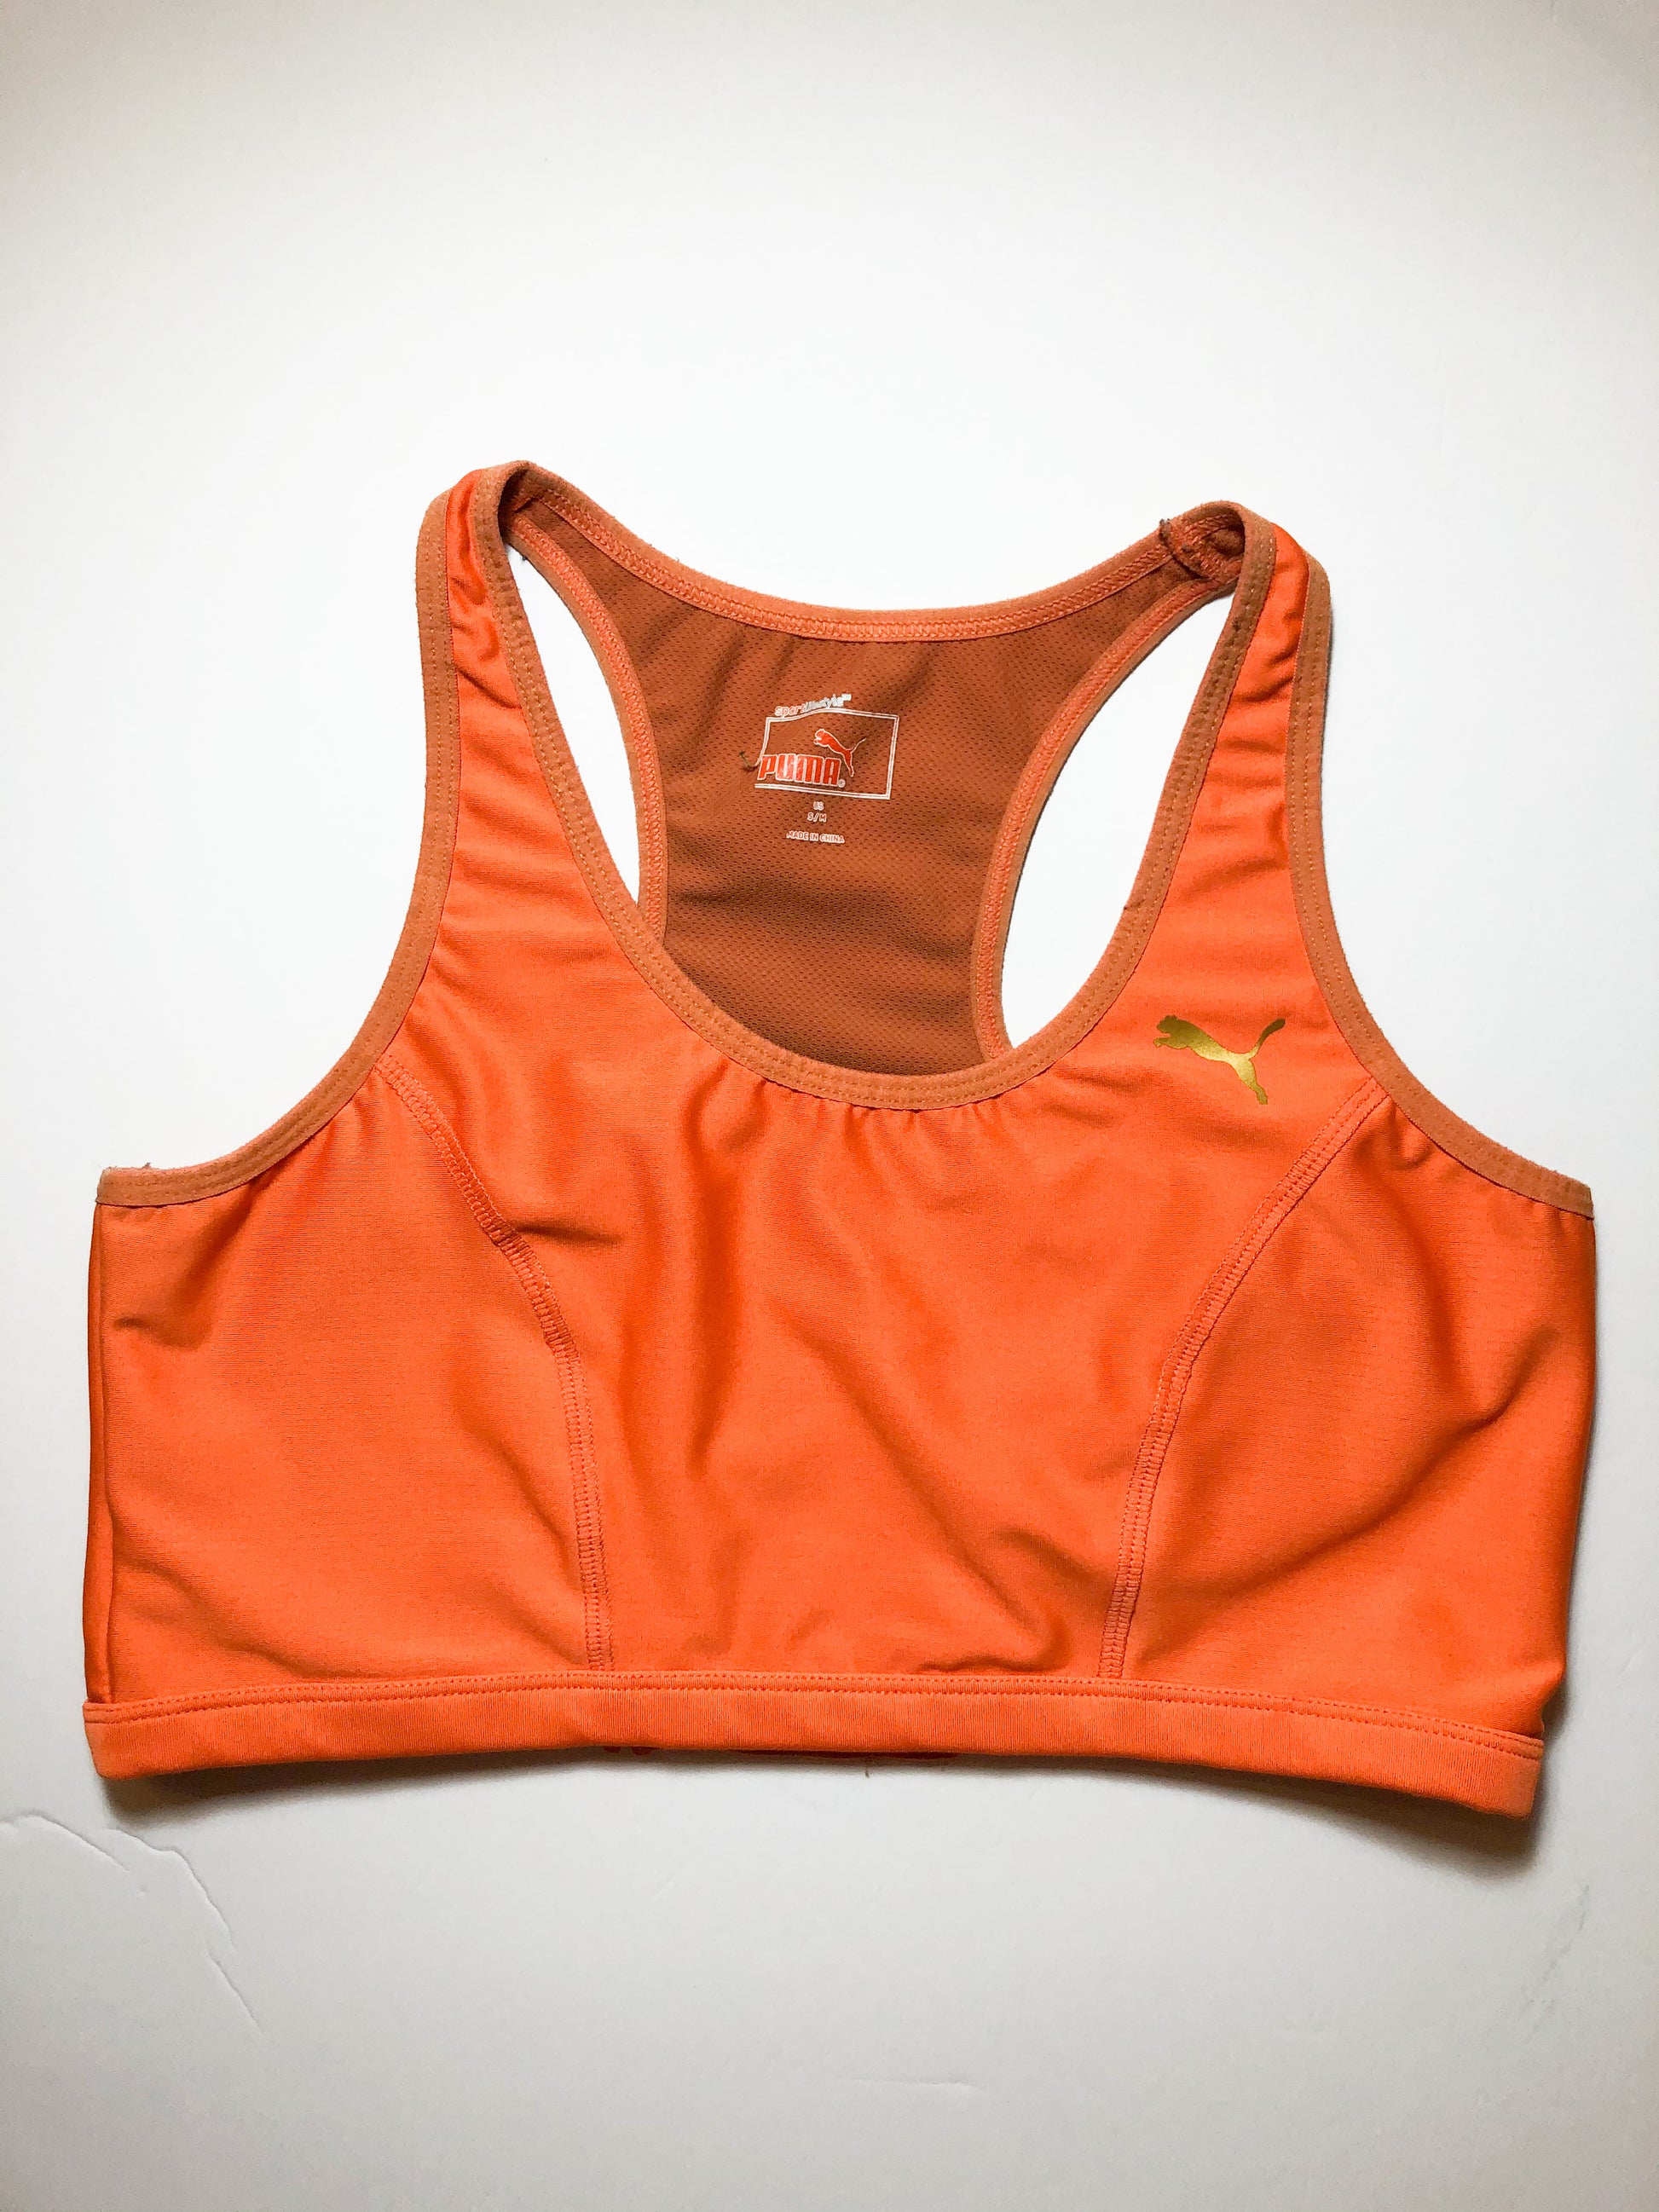 Puma Orange Sports Bra with Back Cutout - S/M – Le Prix Fashion